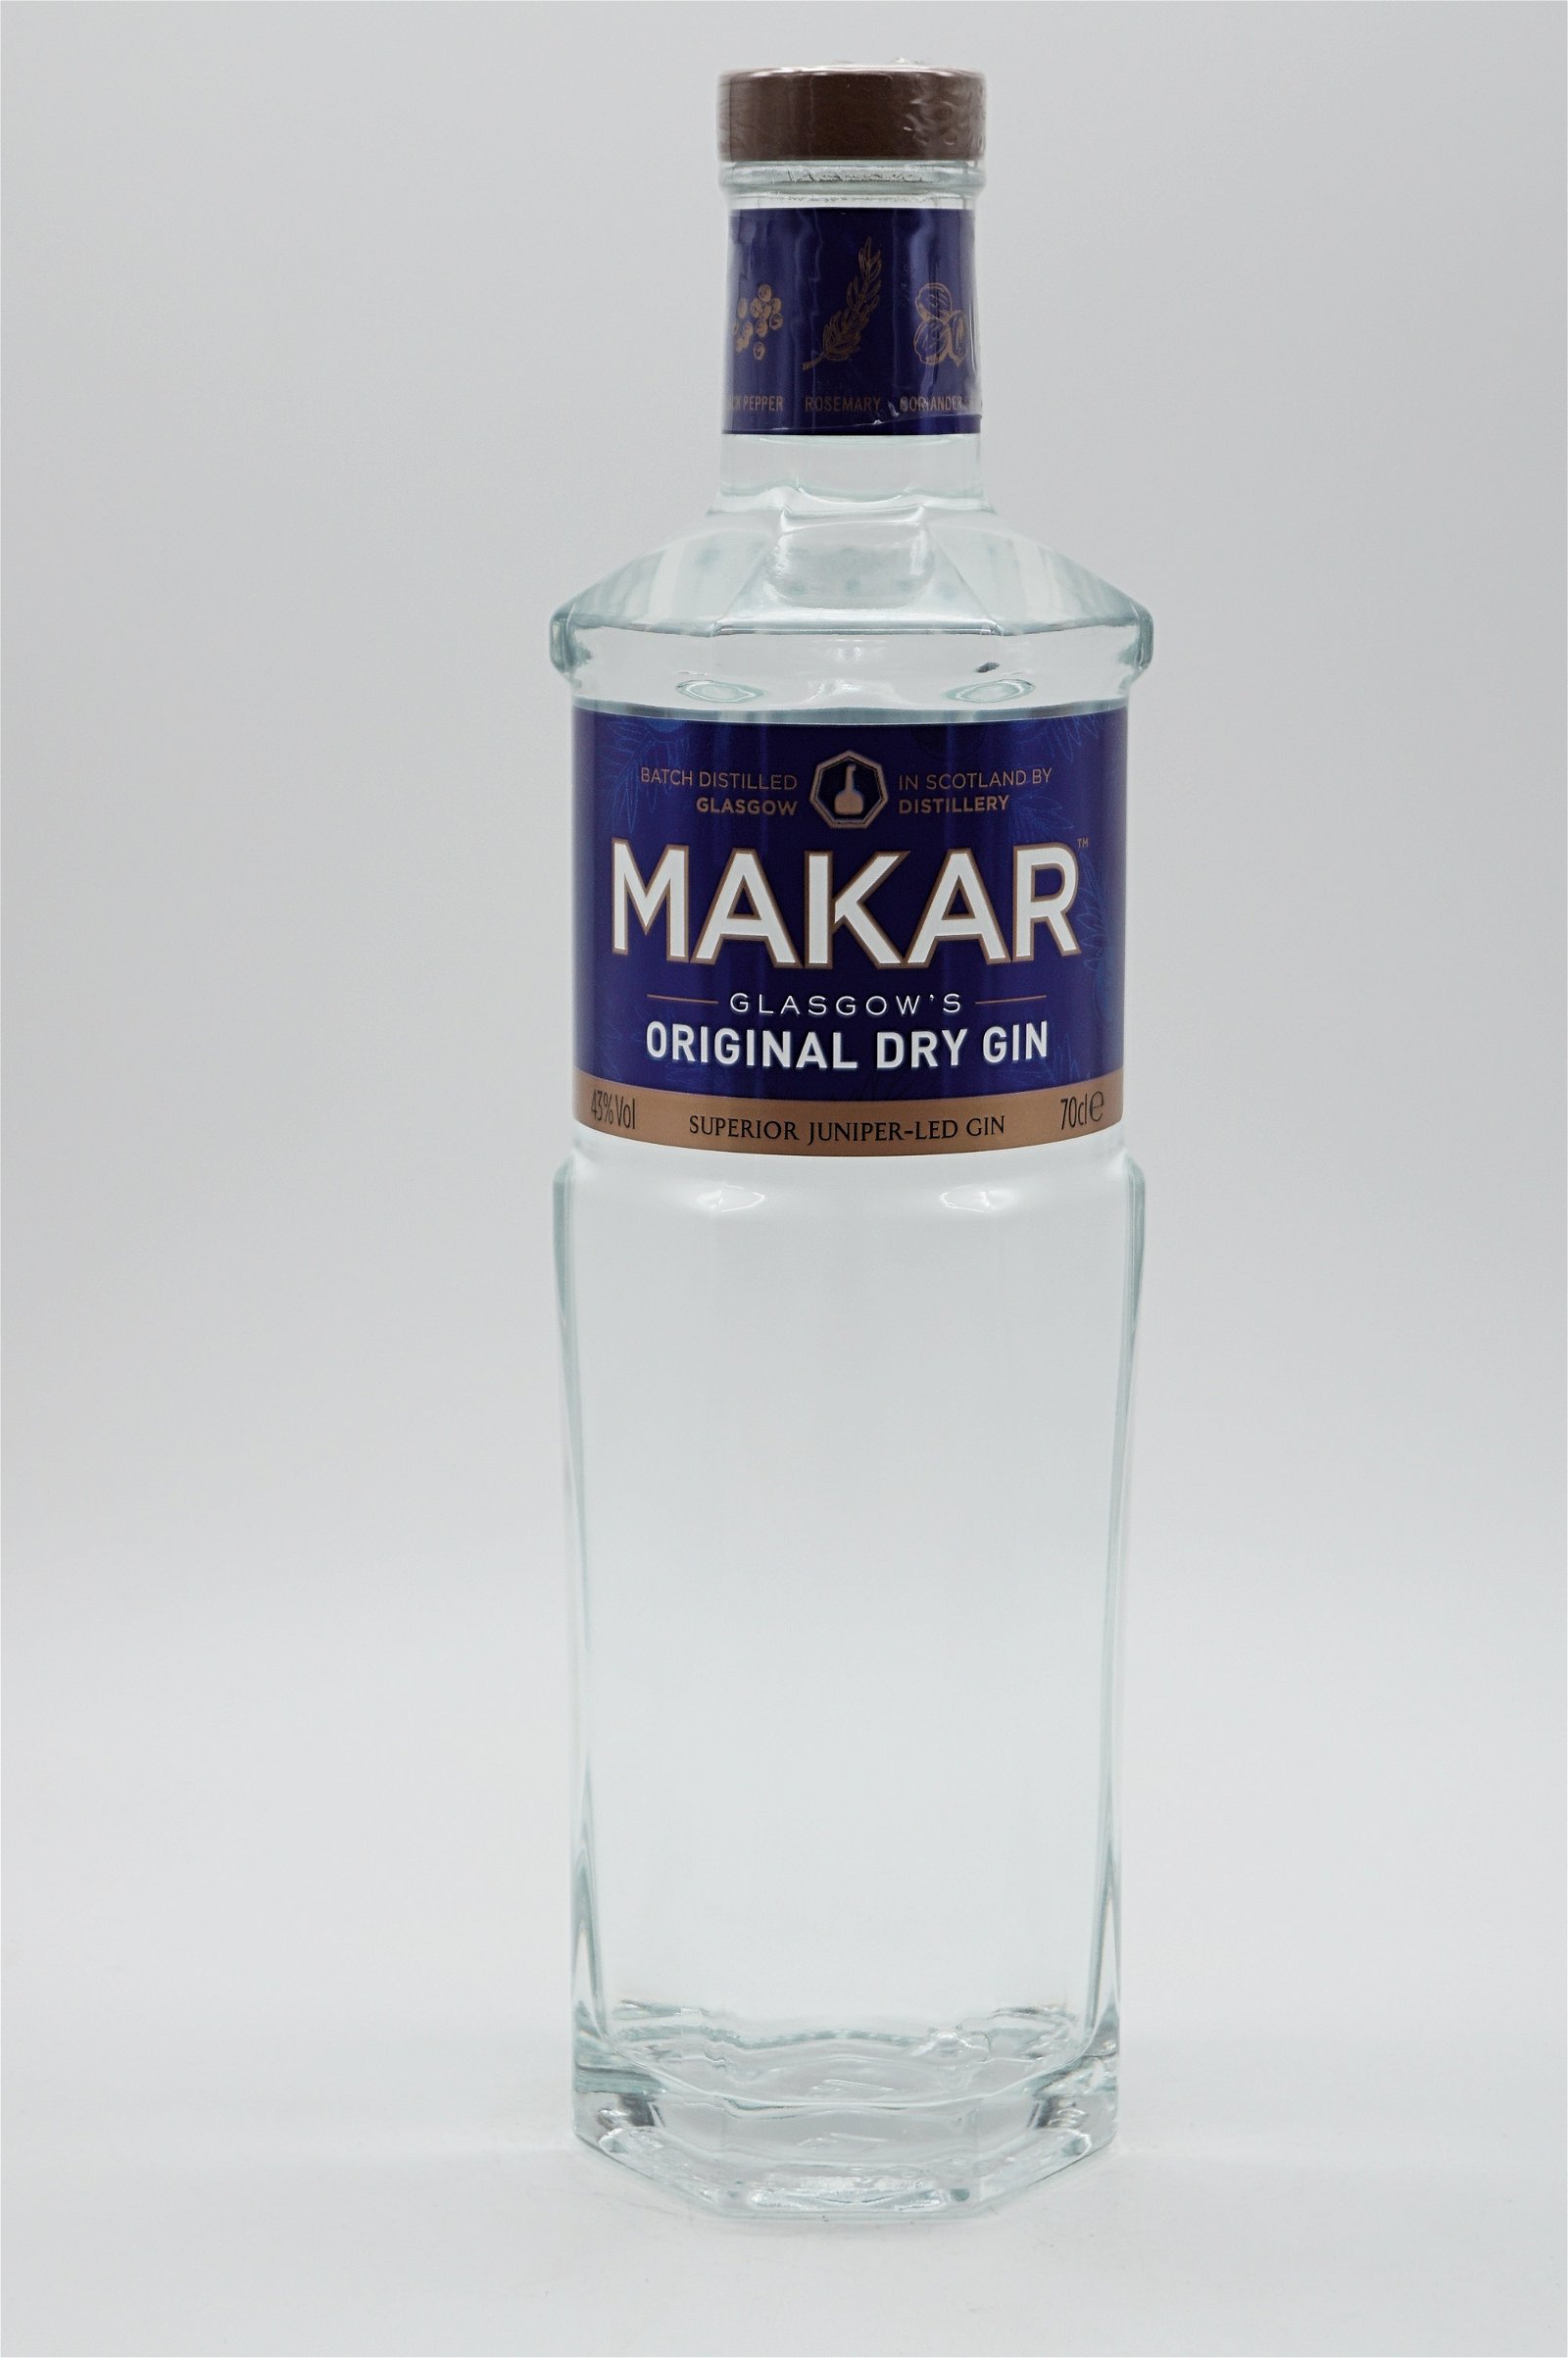 Makar Glasgows Original Dry Gin